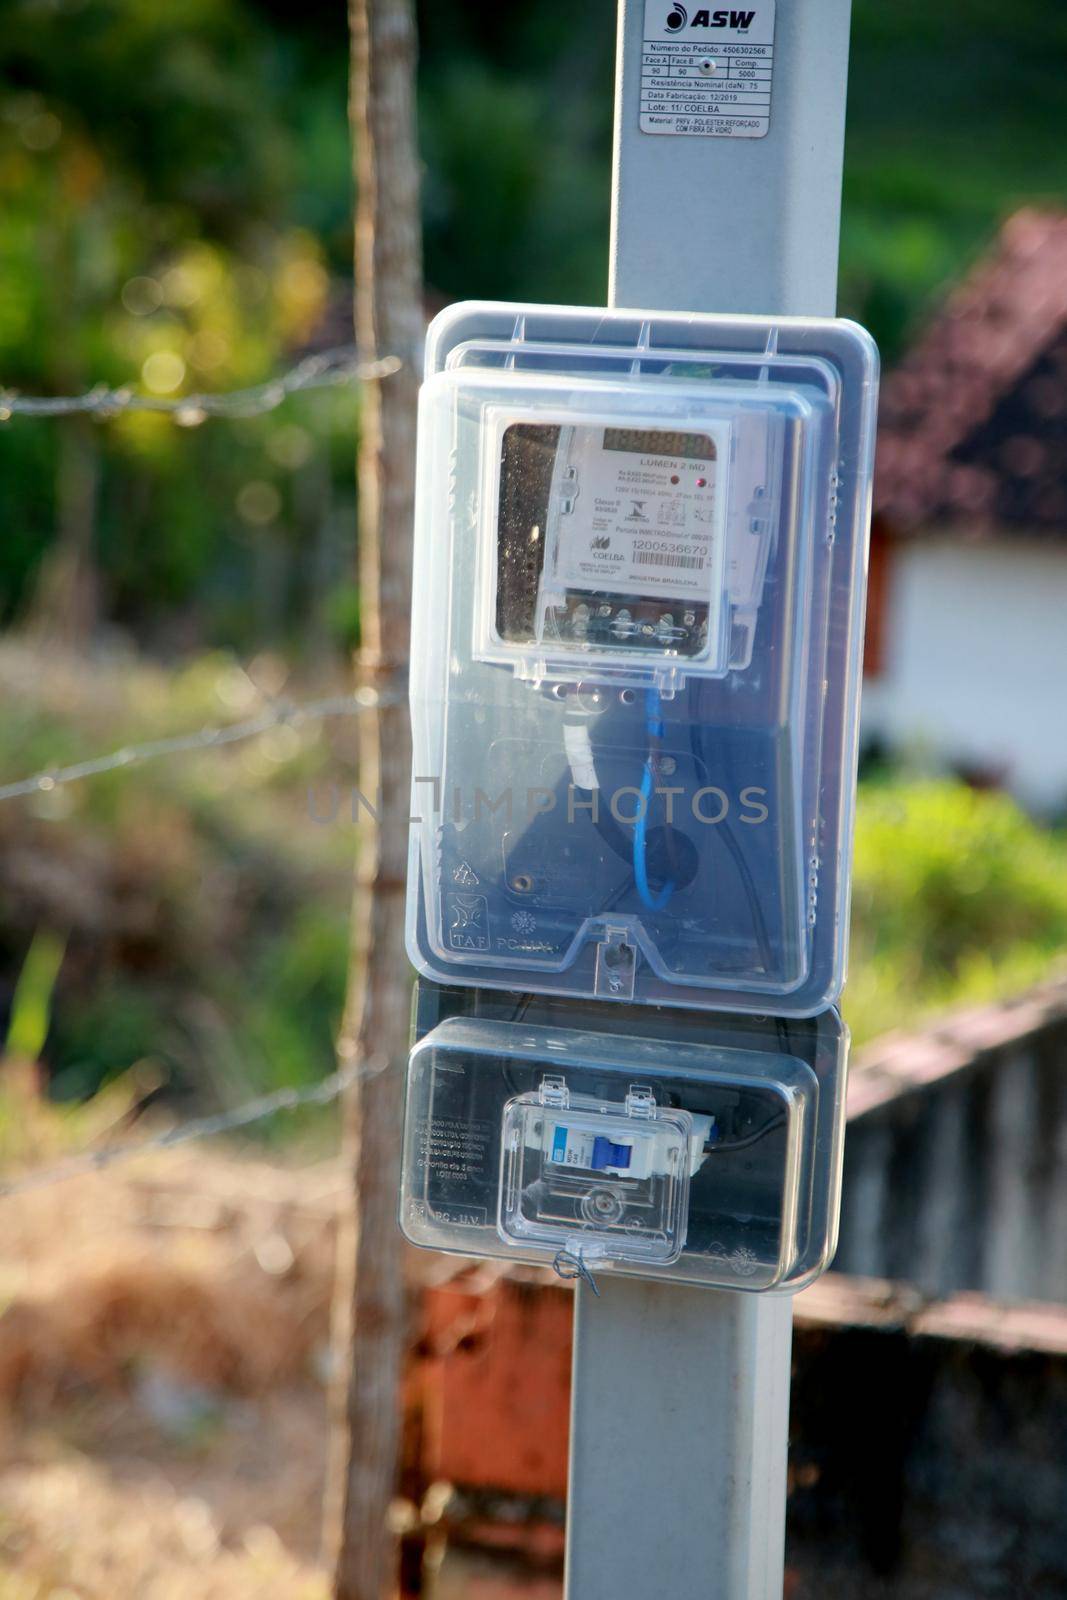 mata de sao joao, bahia / brazil - october 25, 2020: electricity meter is seen in a residence in the rural area of the city of Mata de Sao Joao.